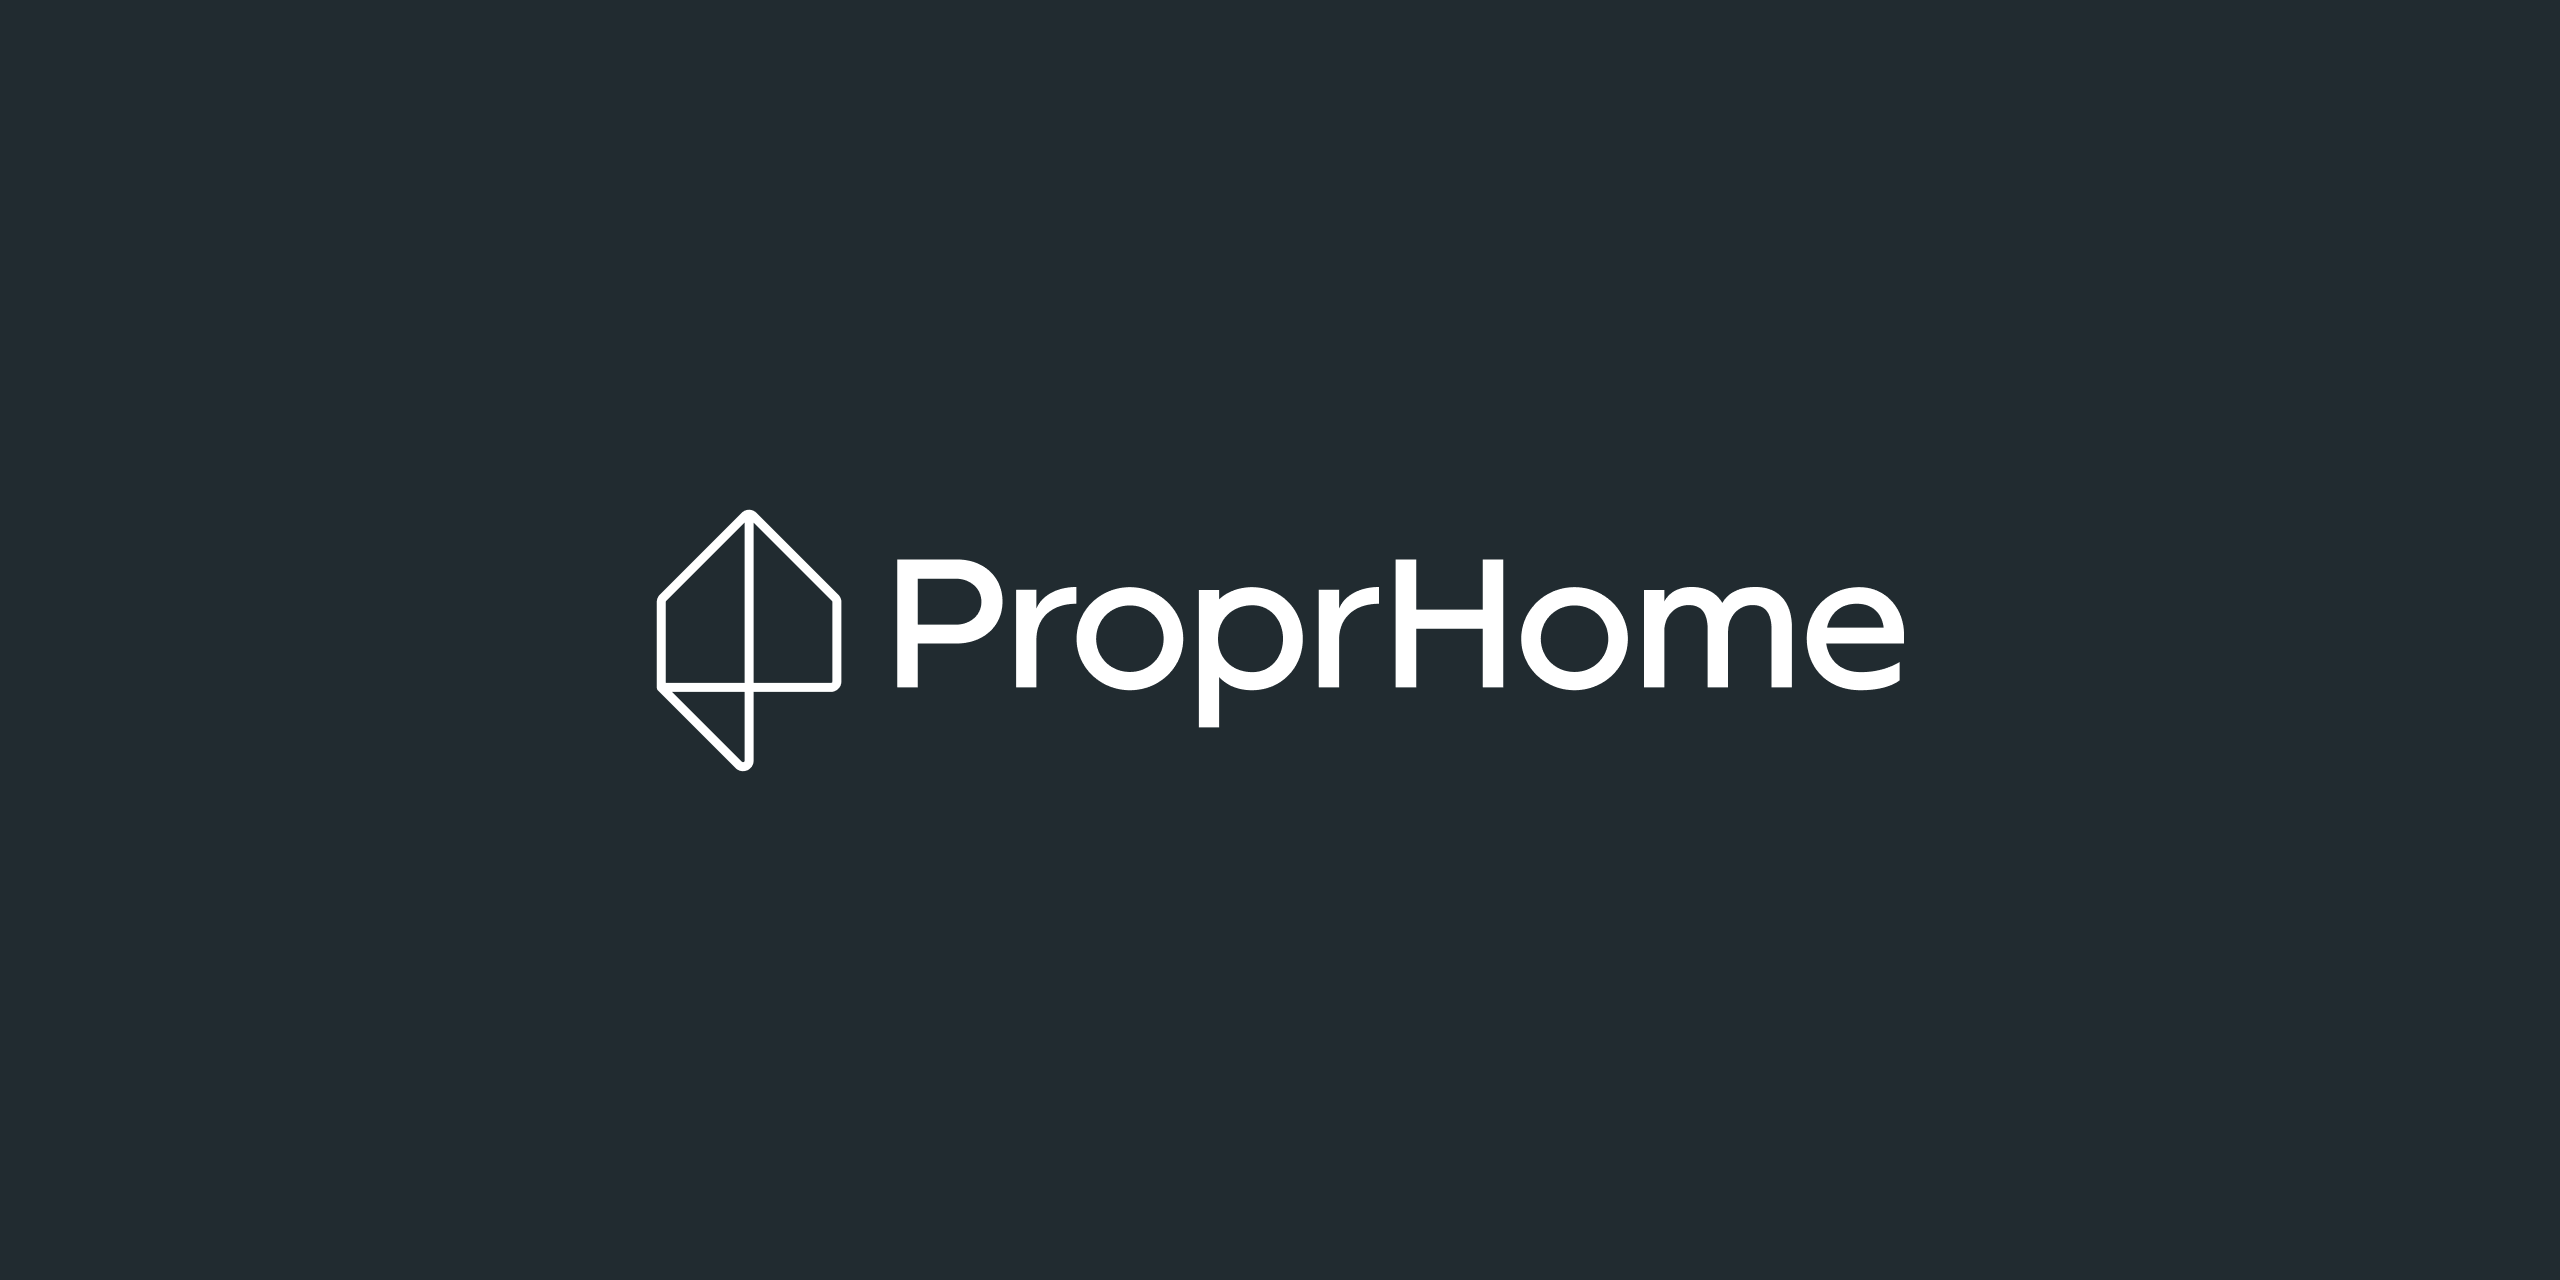 proprhome-mono-logo-by-brandforma